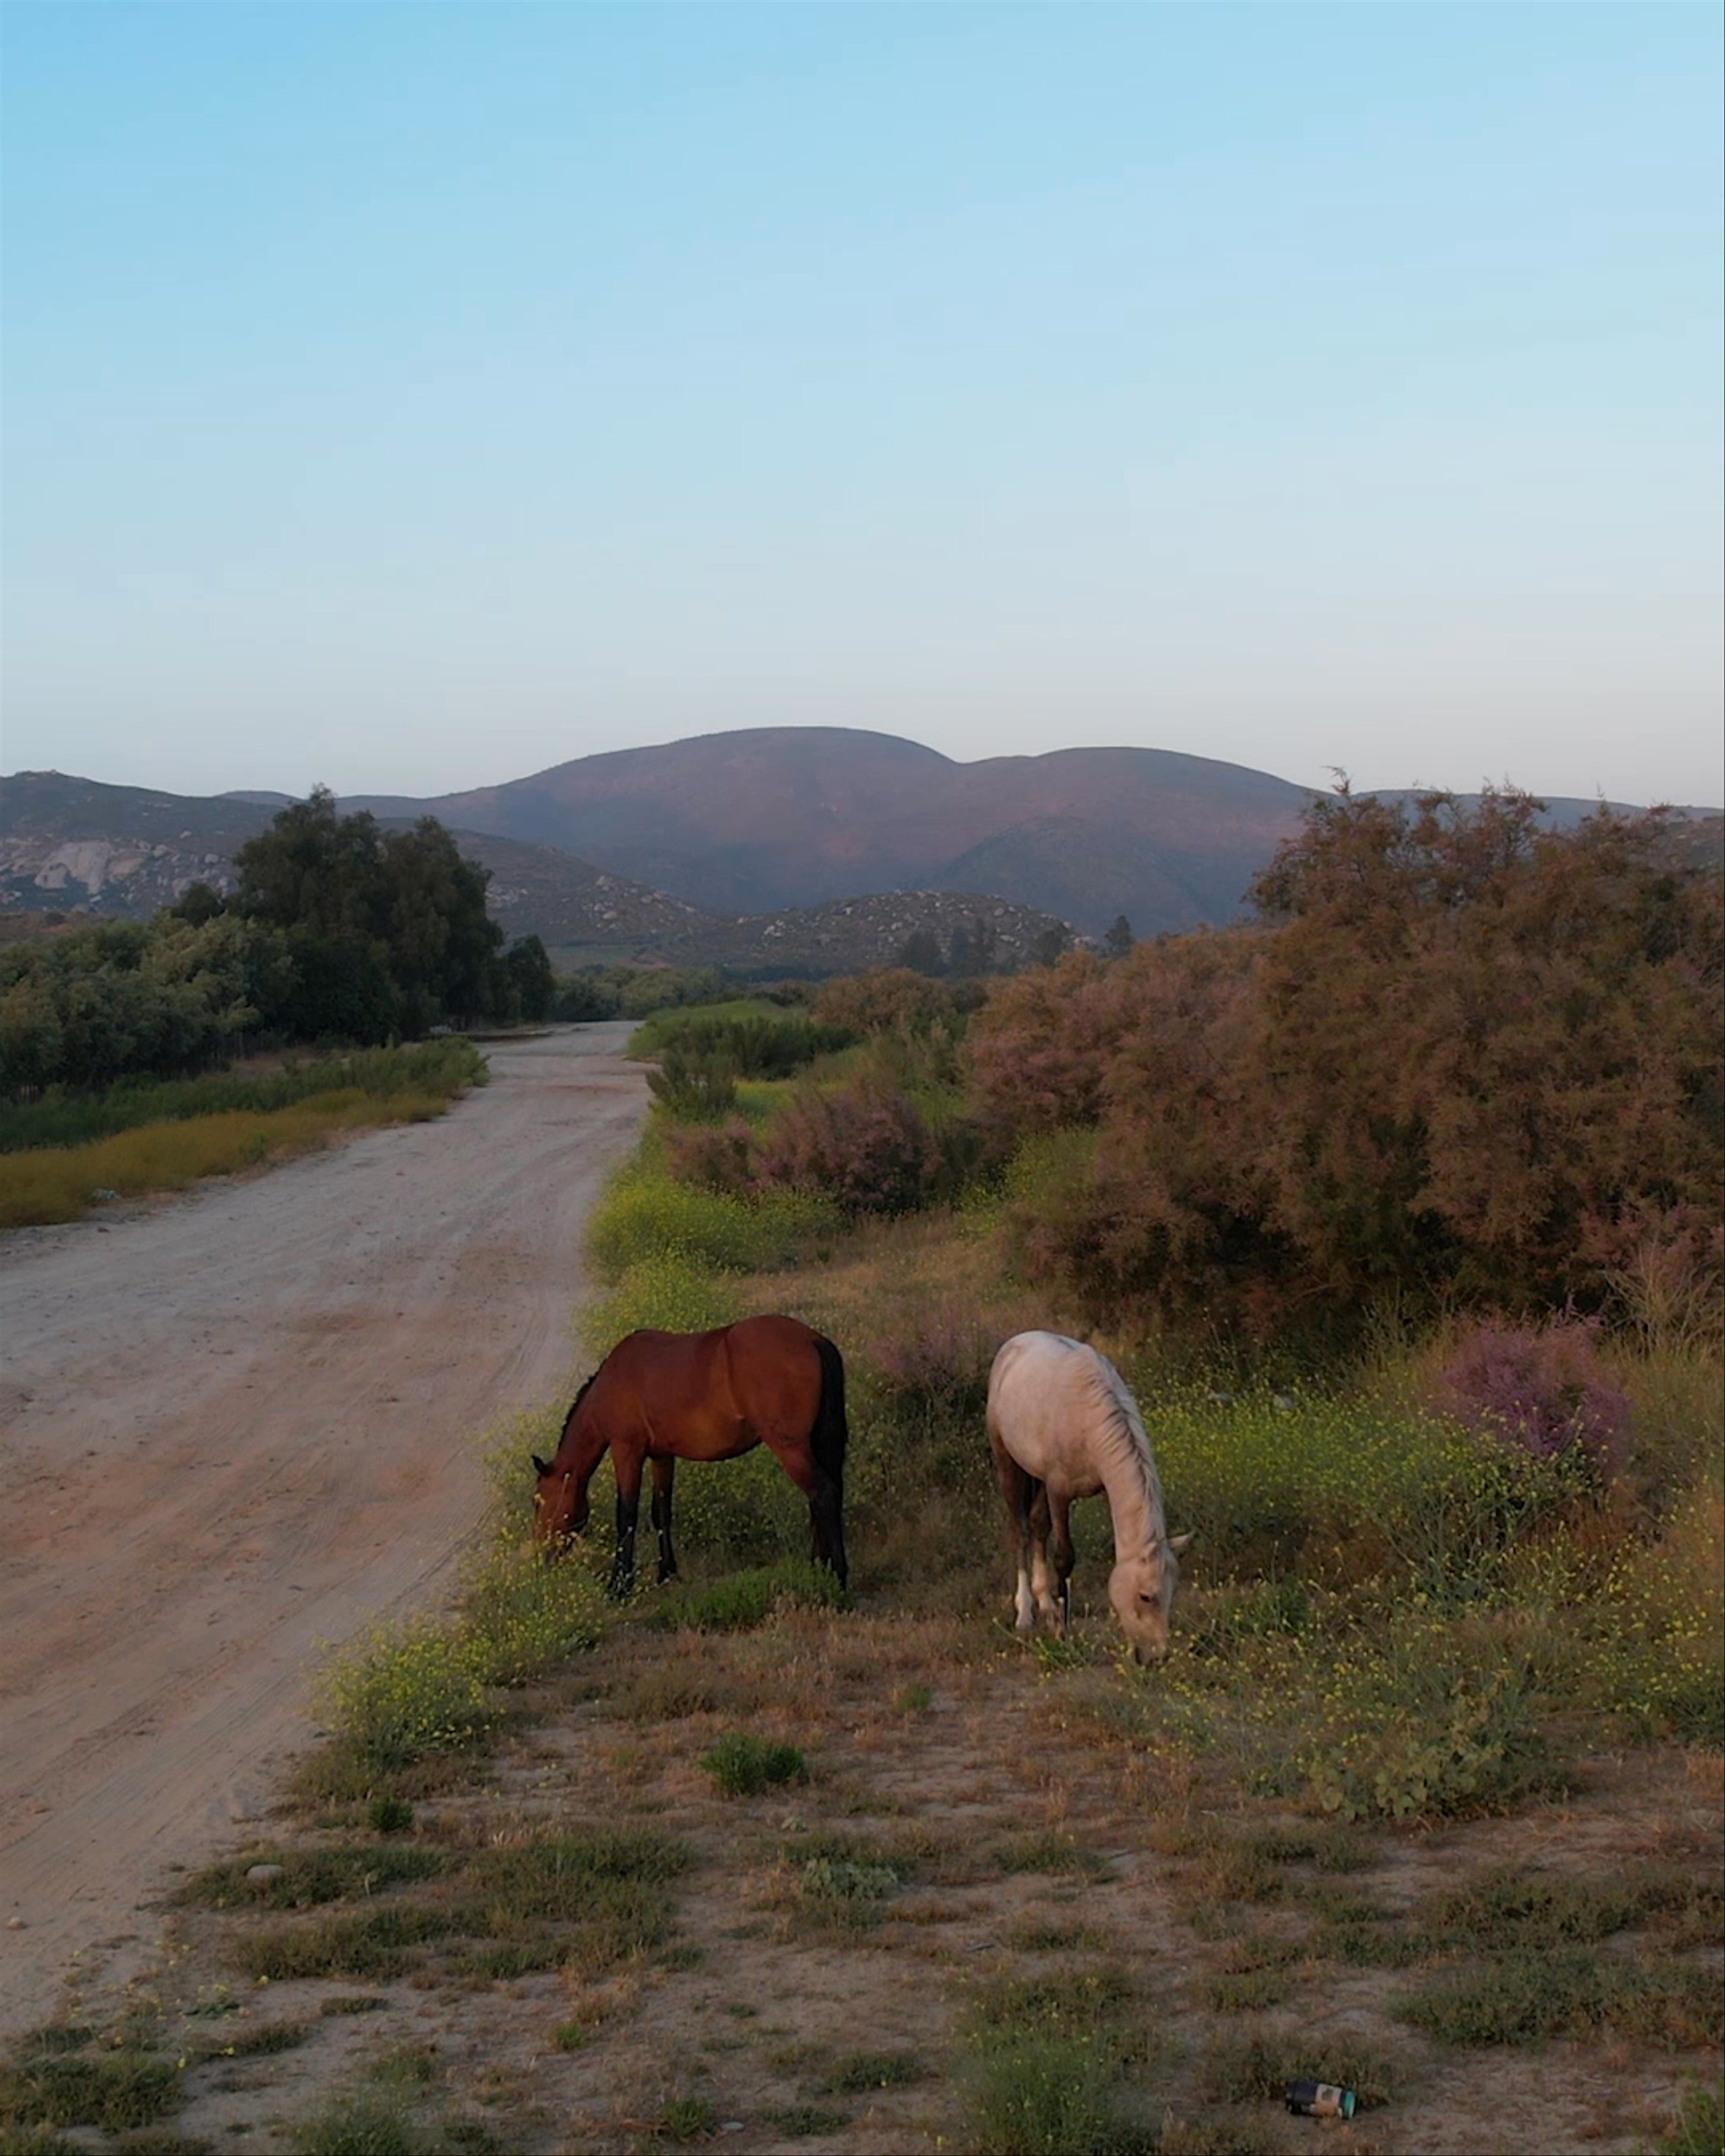 Video loop of horses grazing alongside dirt road in Baja California